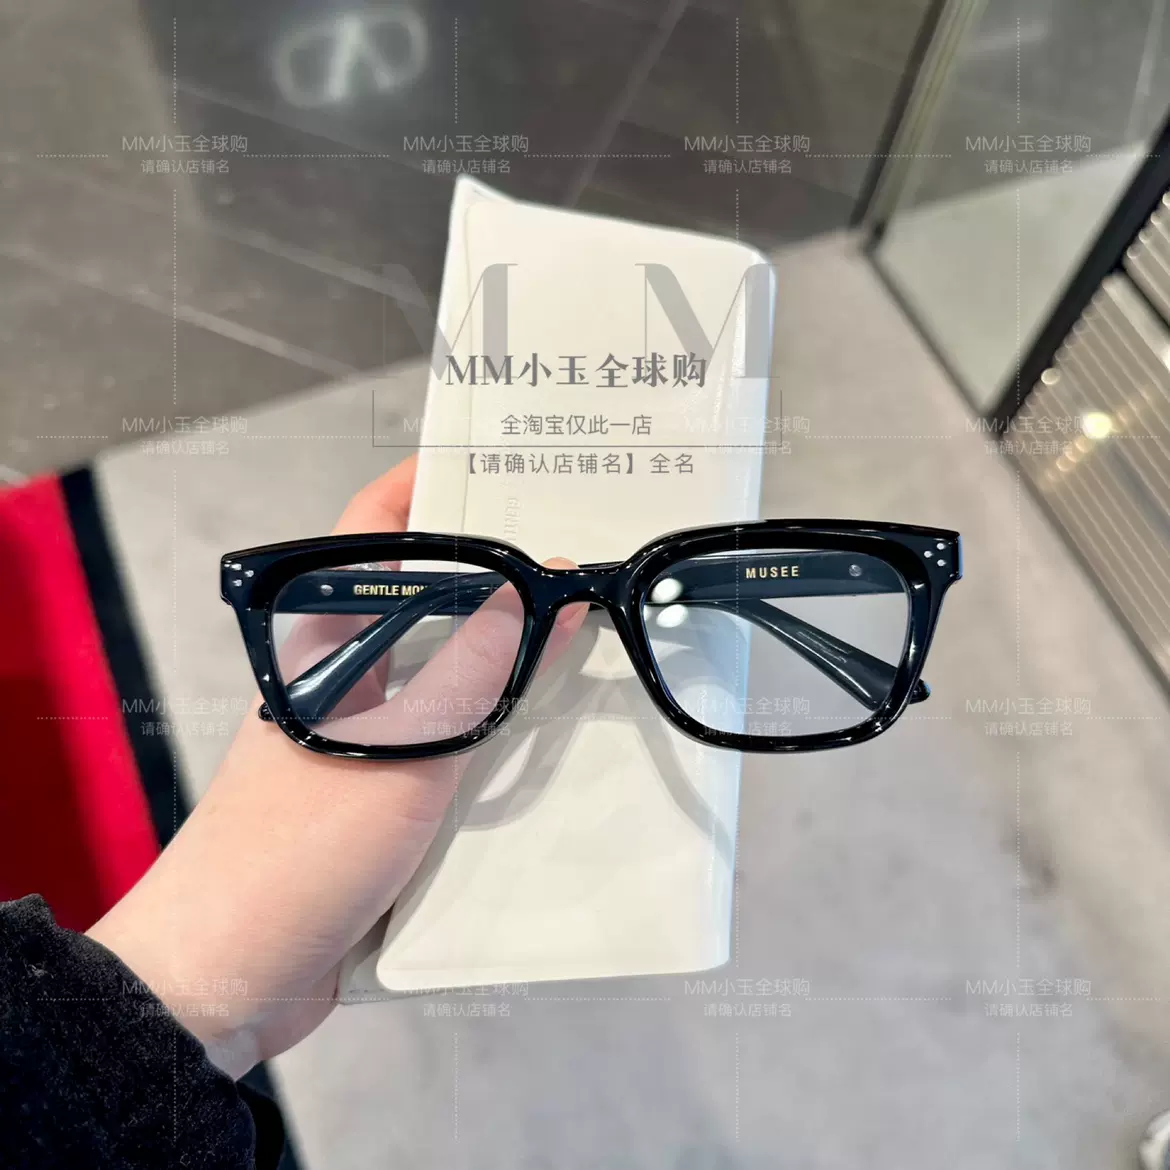 MUSEE】2023年新款GM GENTLE MONSTER墨镜太阳镜板材墨镜潮品-Taobao